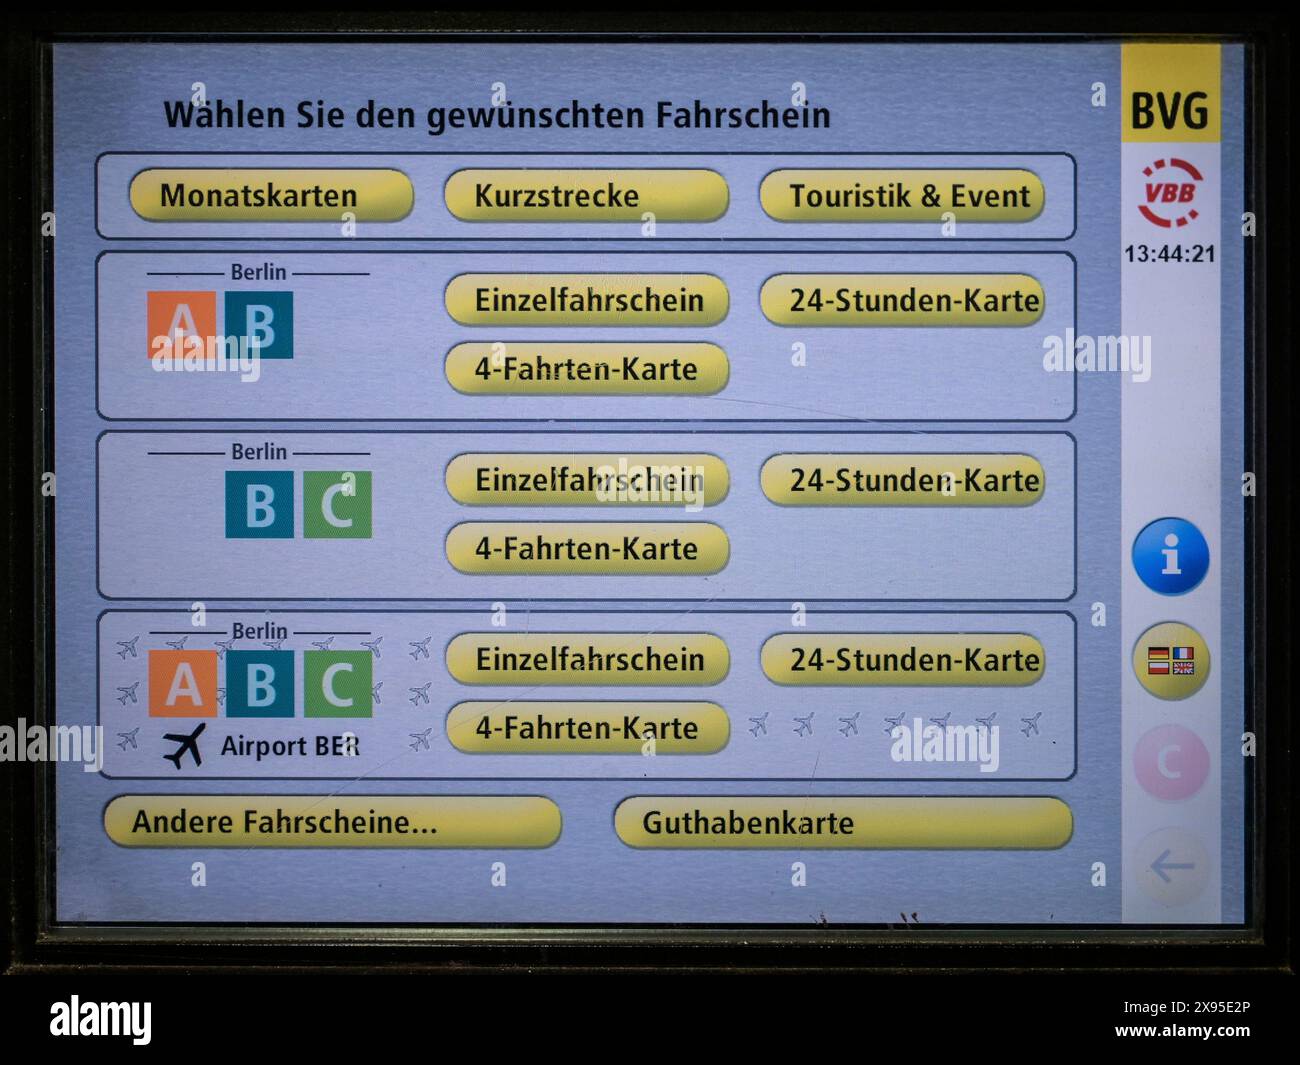 Distributeur de billets BVG, Berlin, Allemagne, BVG Fahrkarten-Automat, Berlin, Deutschland Banque D'Images